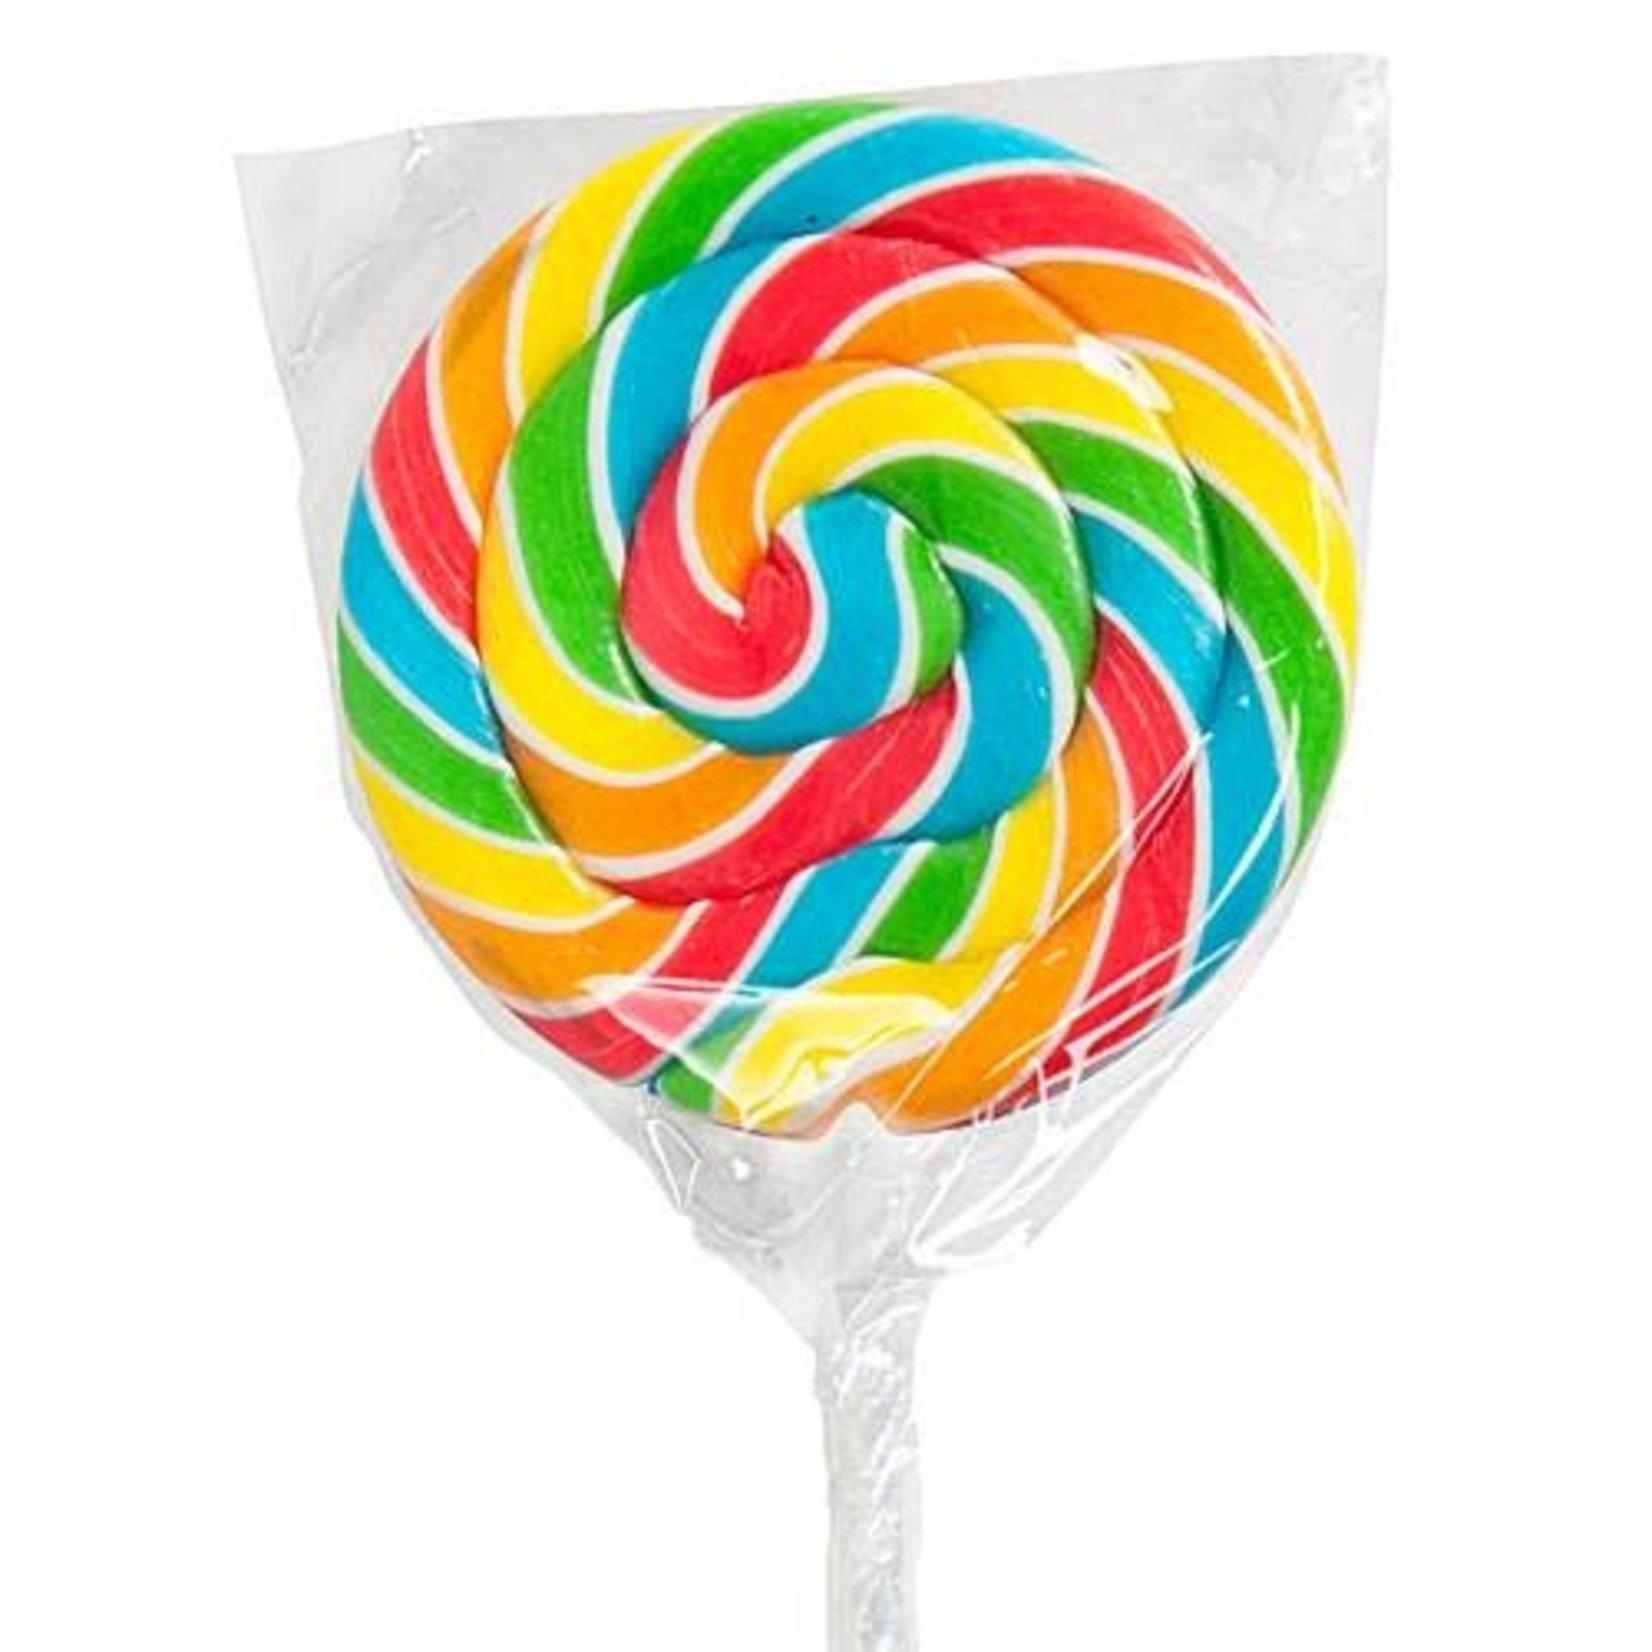 Jumbo Rainbow Swirl Lollipop, Mixed Fruit Flavor, Individually Wrapped, 60 Gr